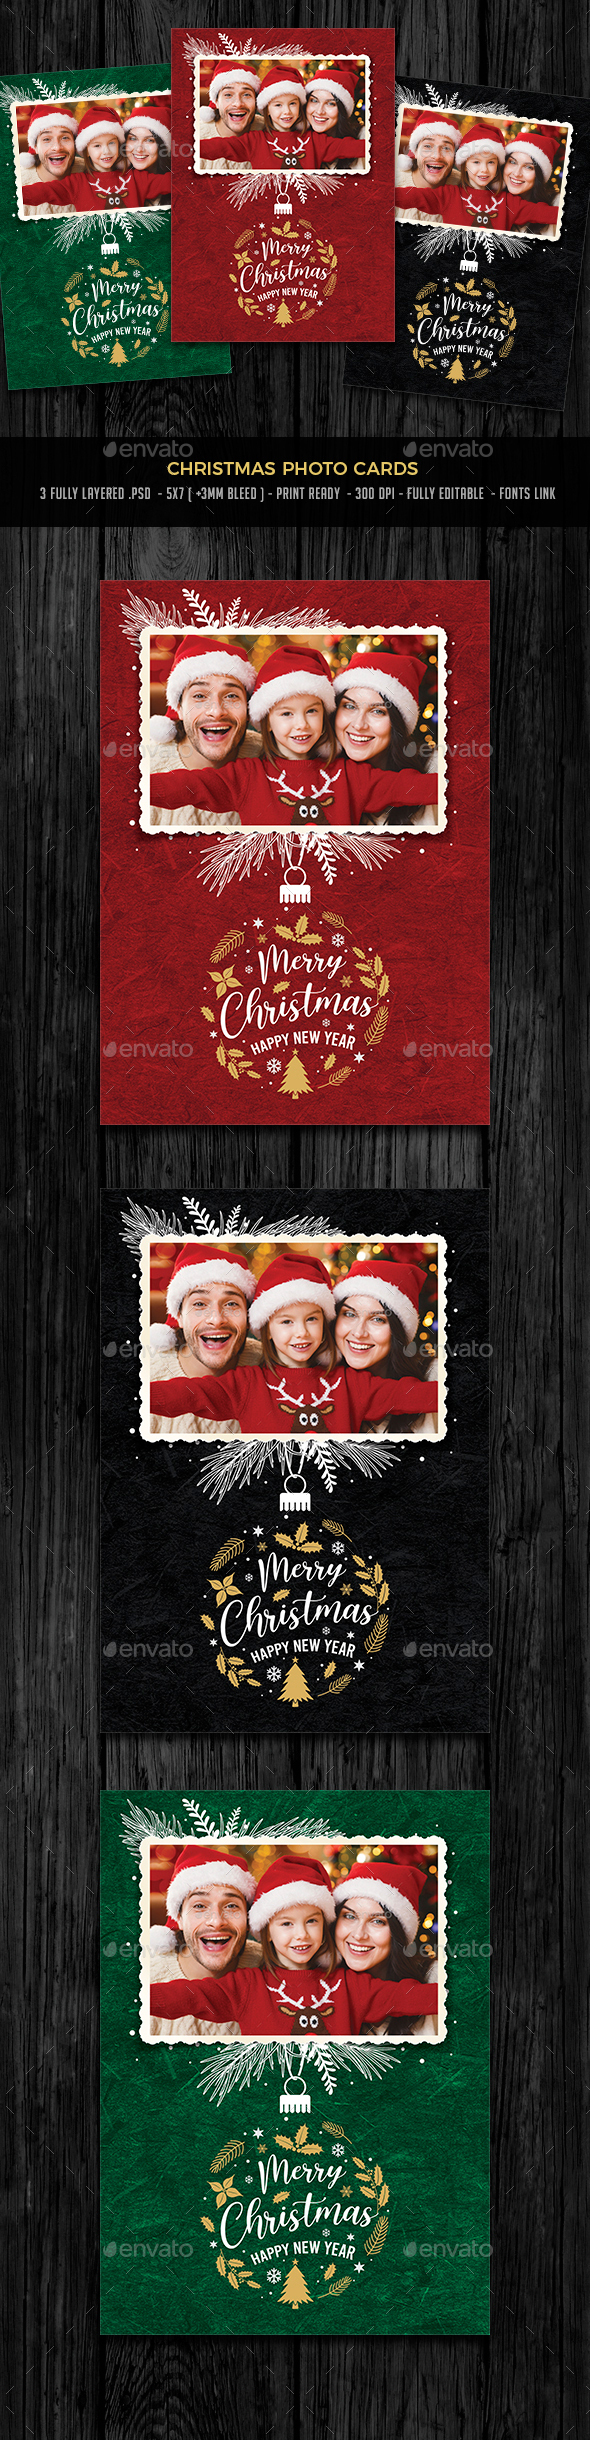 [DOWNLOAD]Christmas Photo Card / Invitation